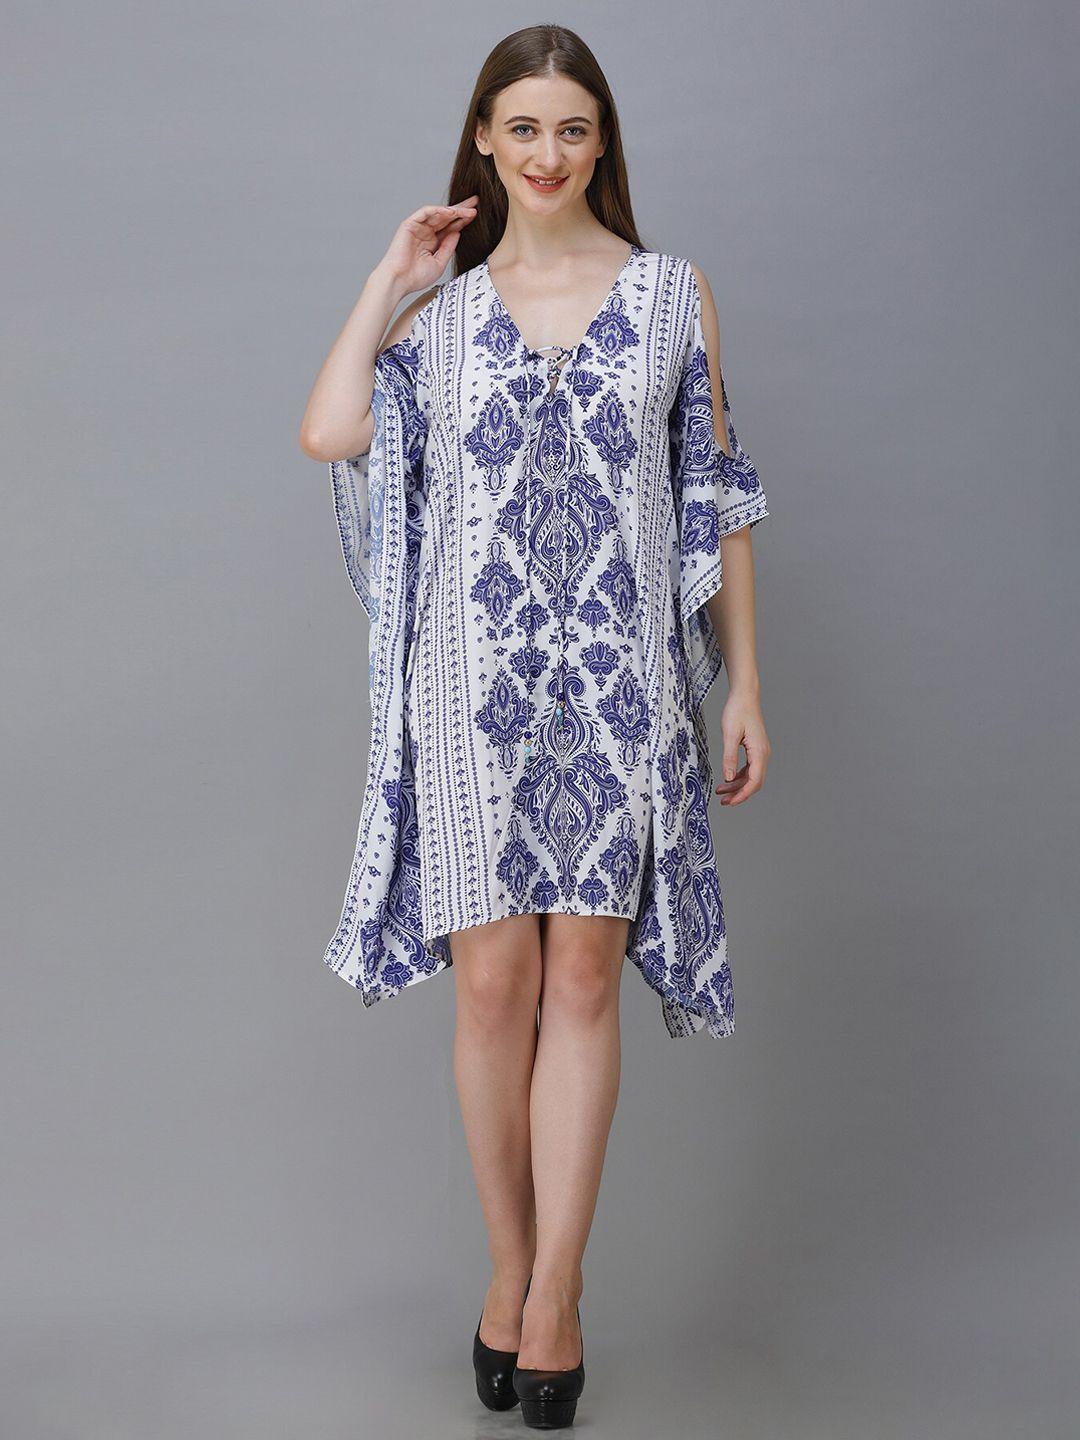 rajoria instyle off white & navy blue ethnic motifs georgette ethnic kaftan dress